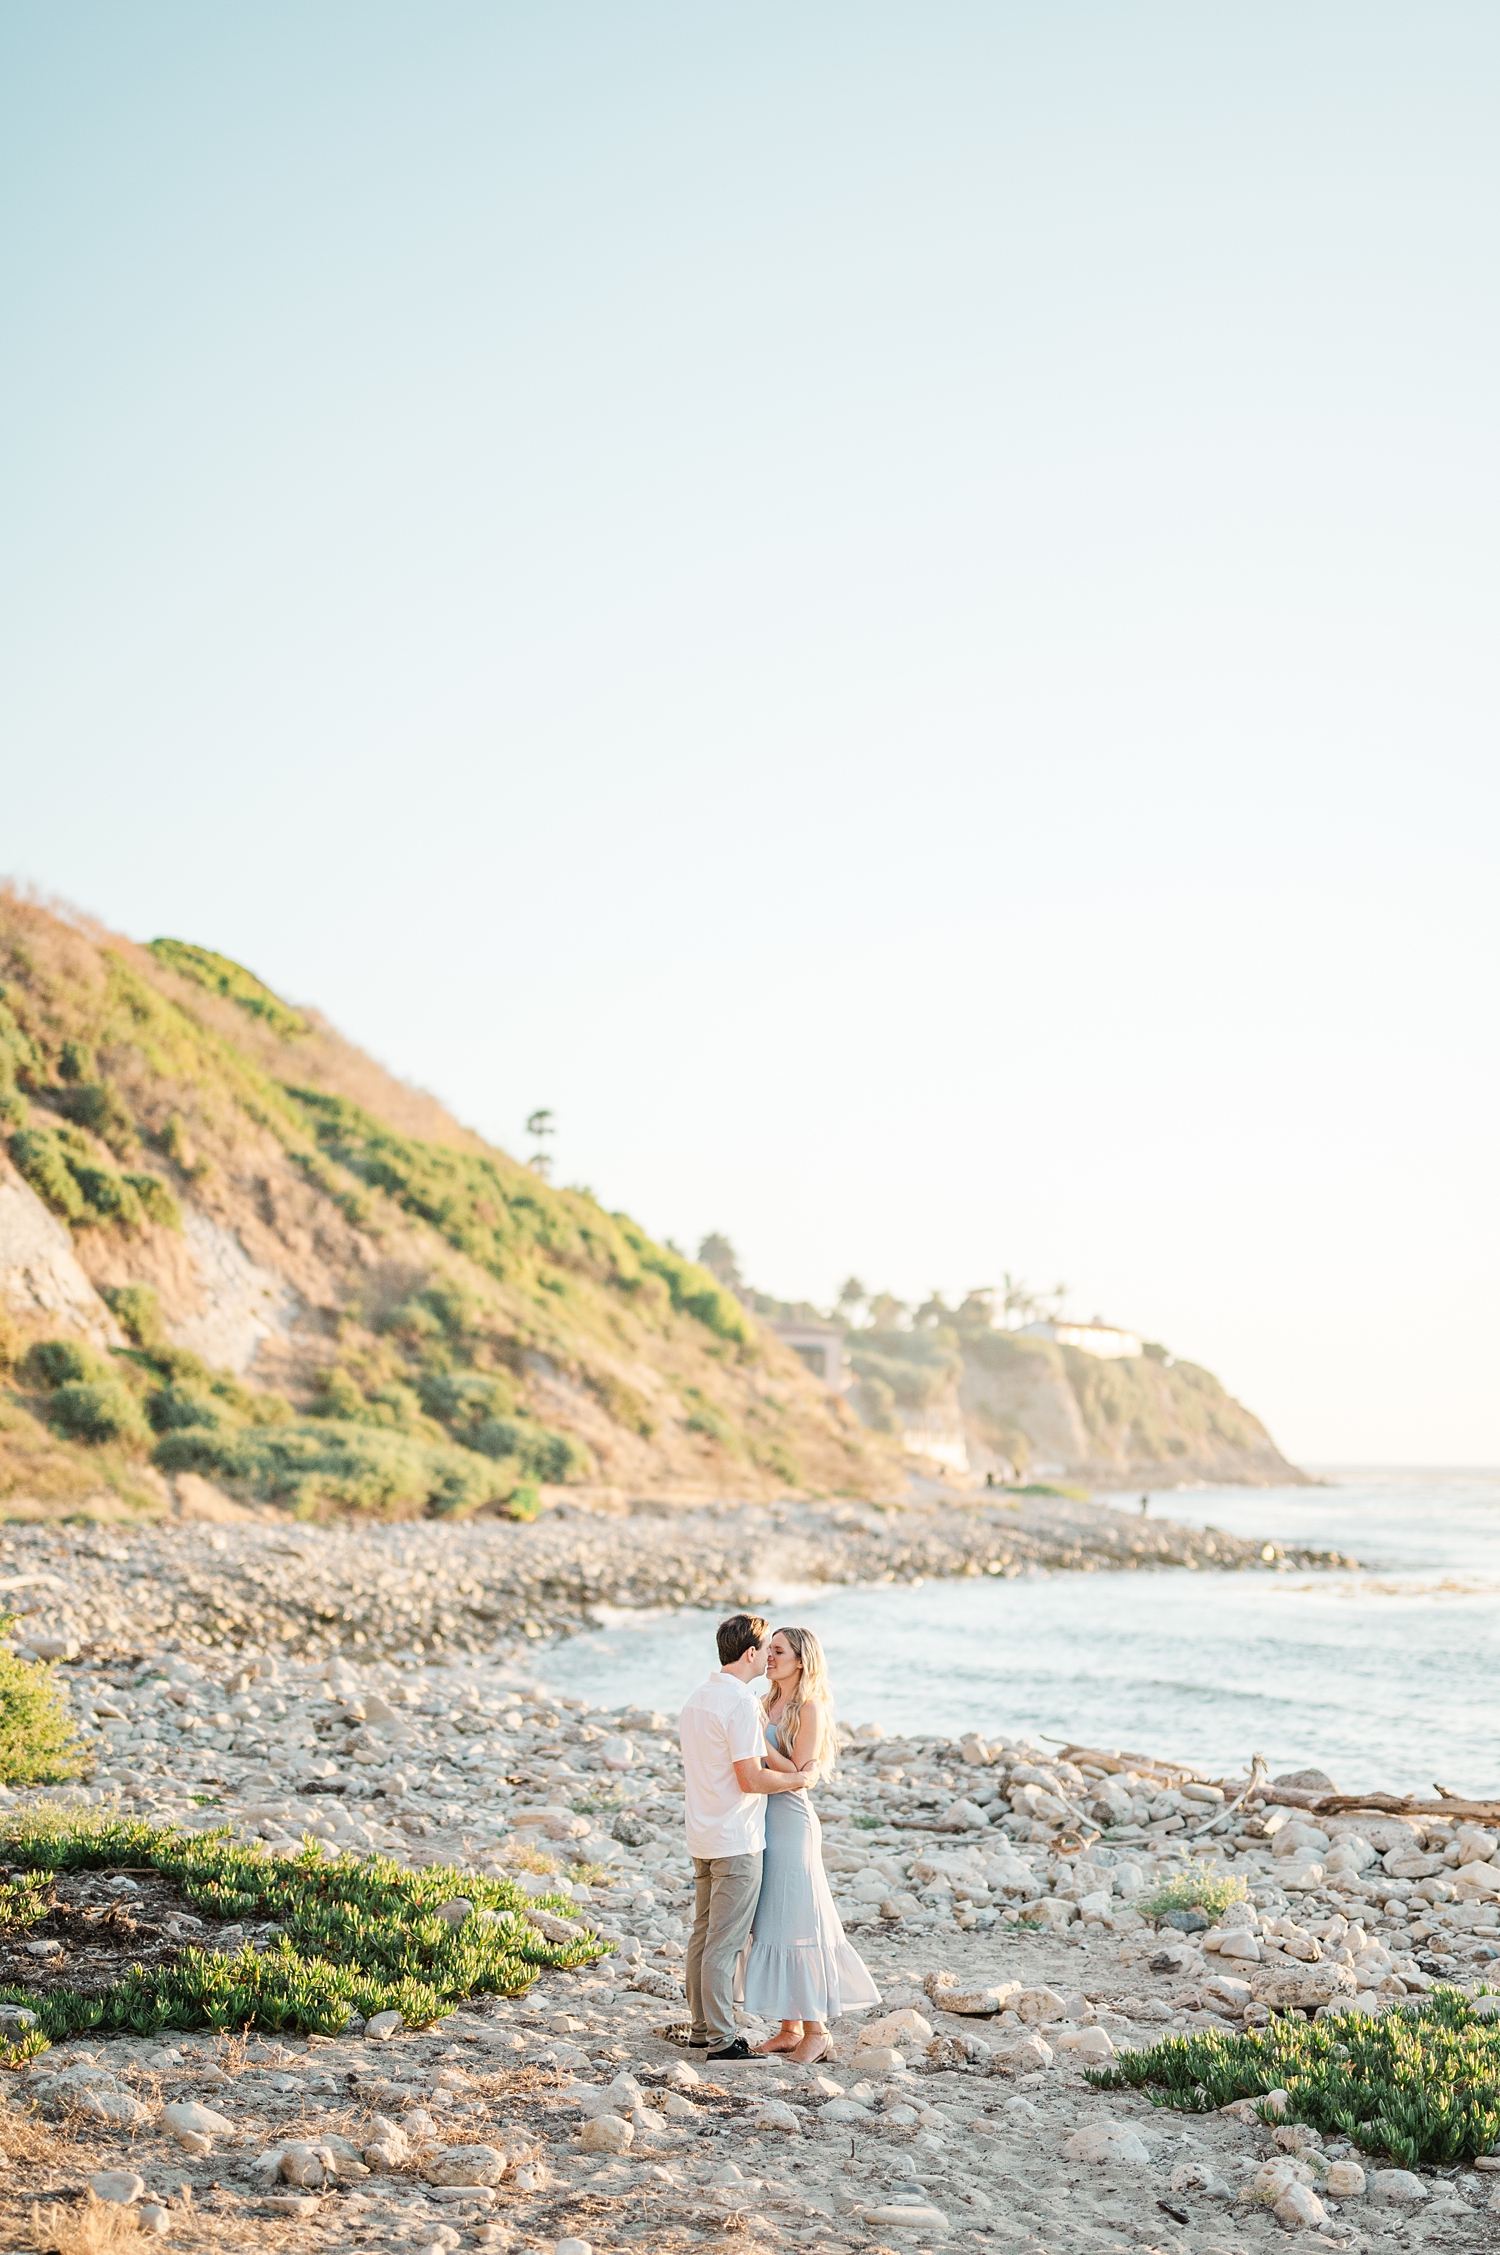 Nataly Hernandez Photography | Palos Verdes Estates Engagement Session | Romantic | Beach | Sunset | Film | Editorial | Fine Art Wedding Photographer -74.jpg